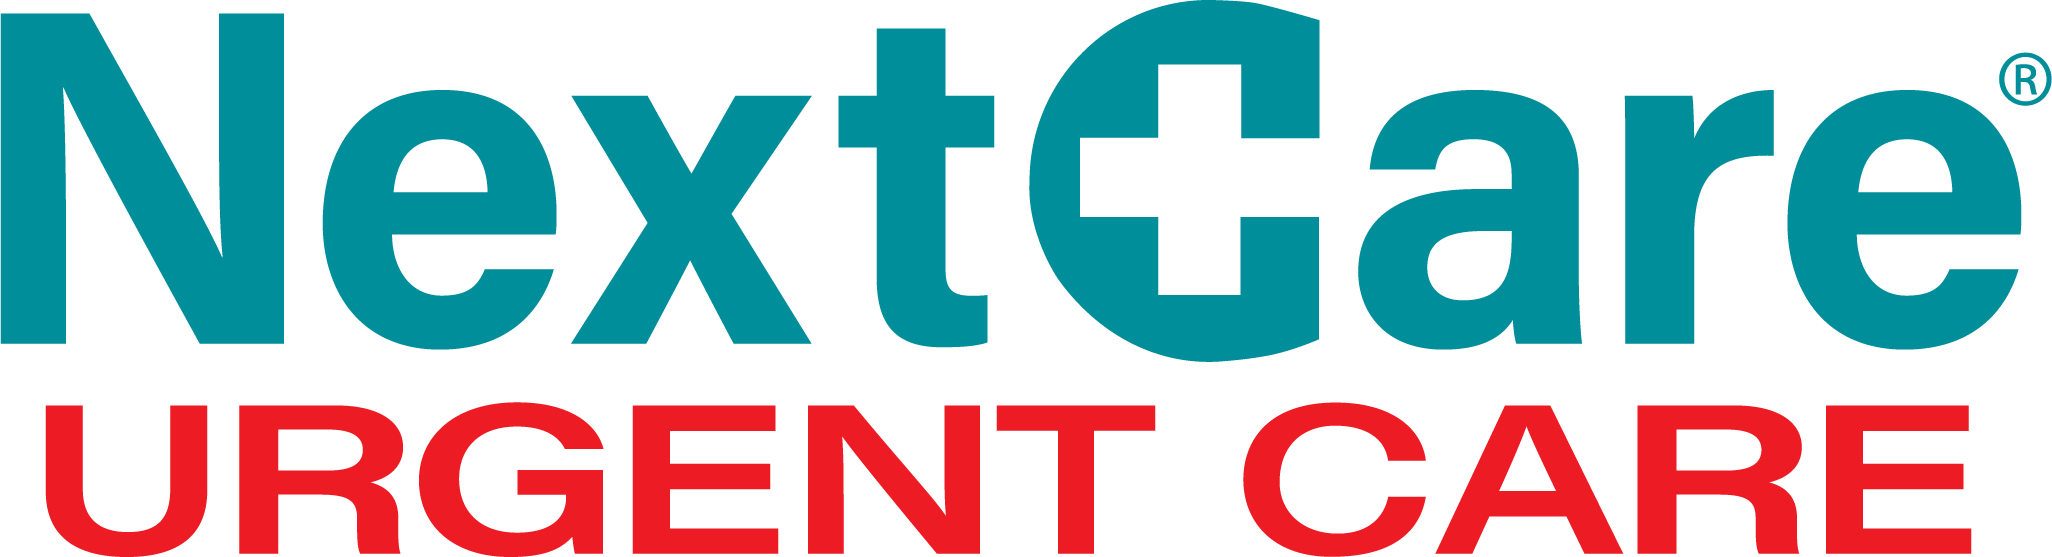 NextCare Urgent Care - Cary Logo